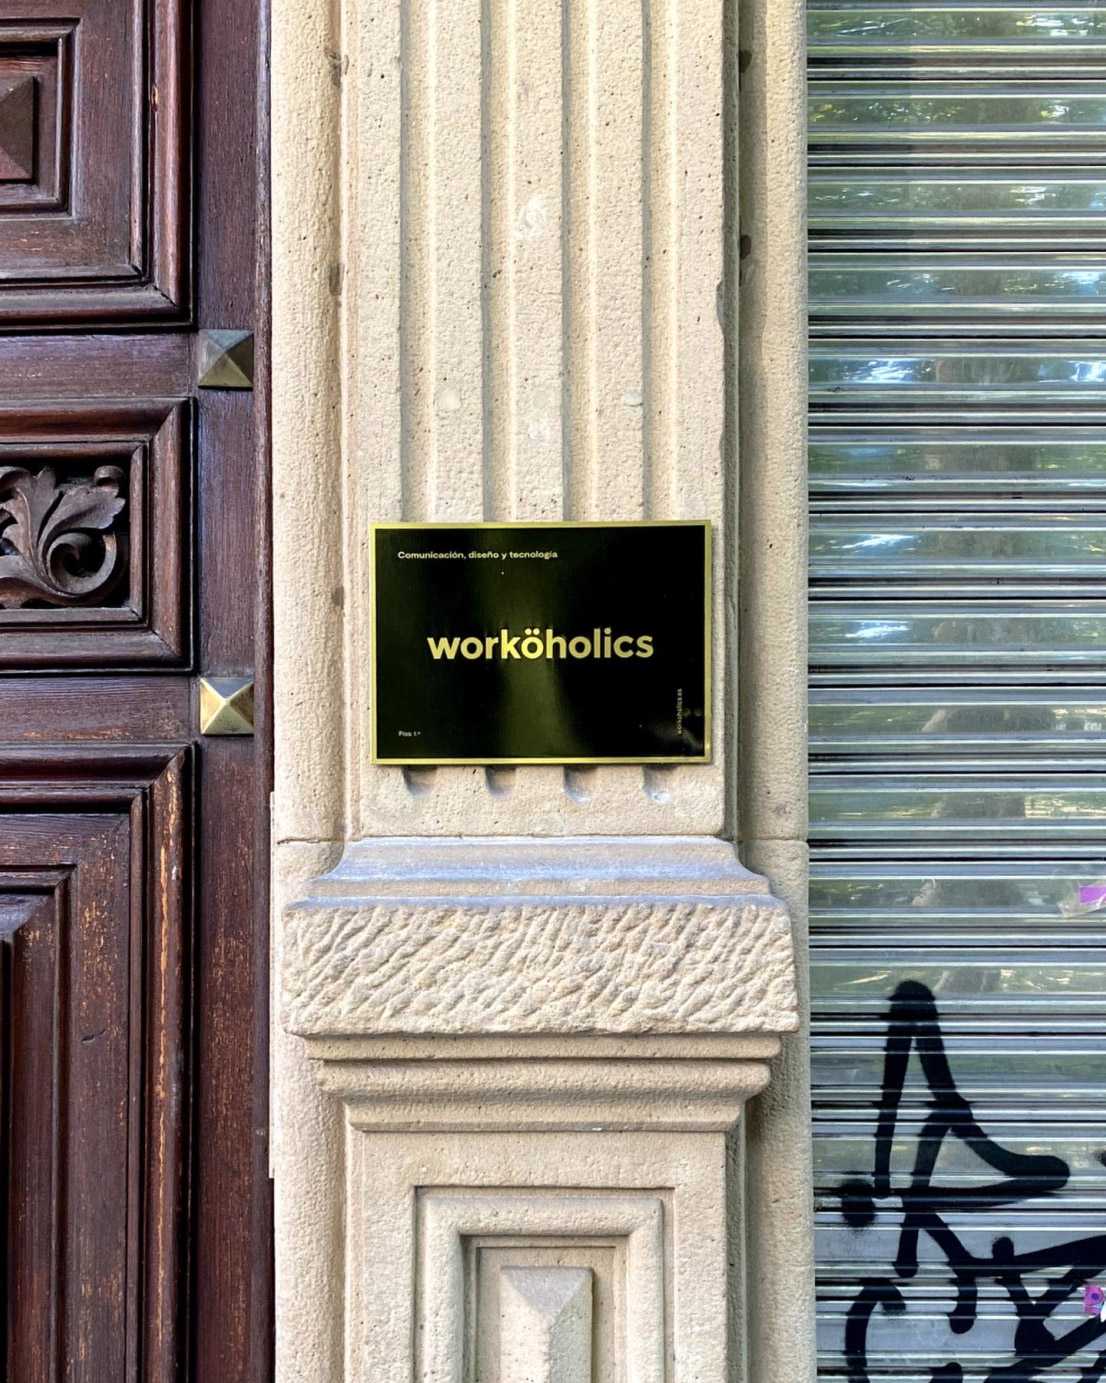 Worköholics entrance plaque